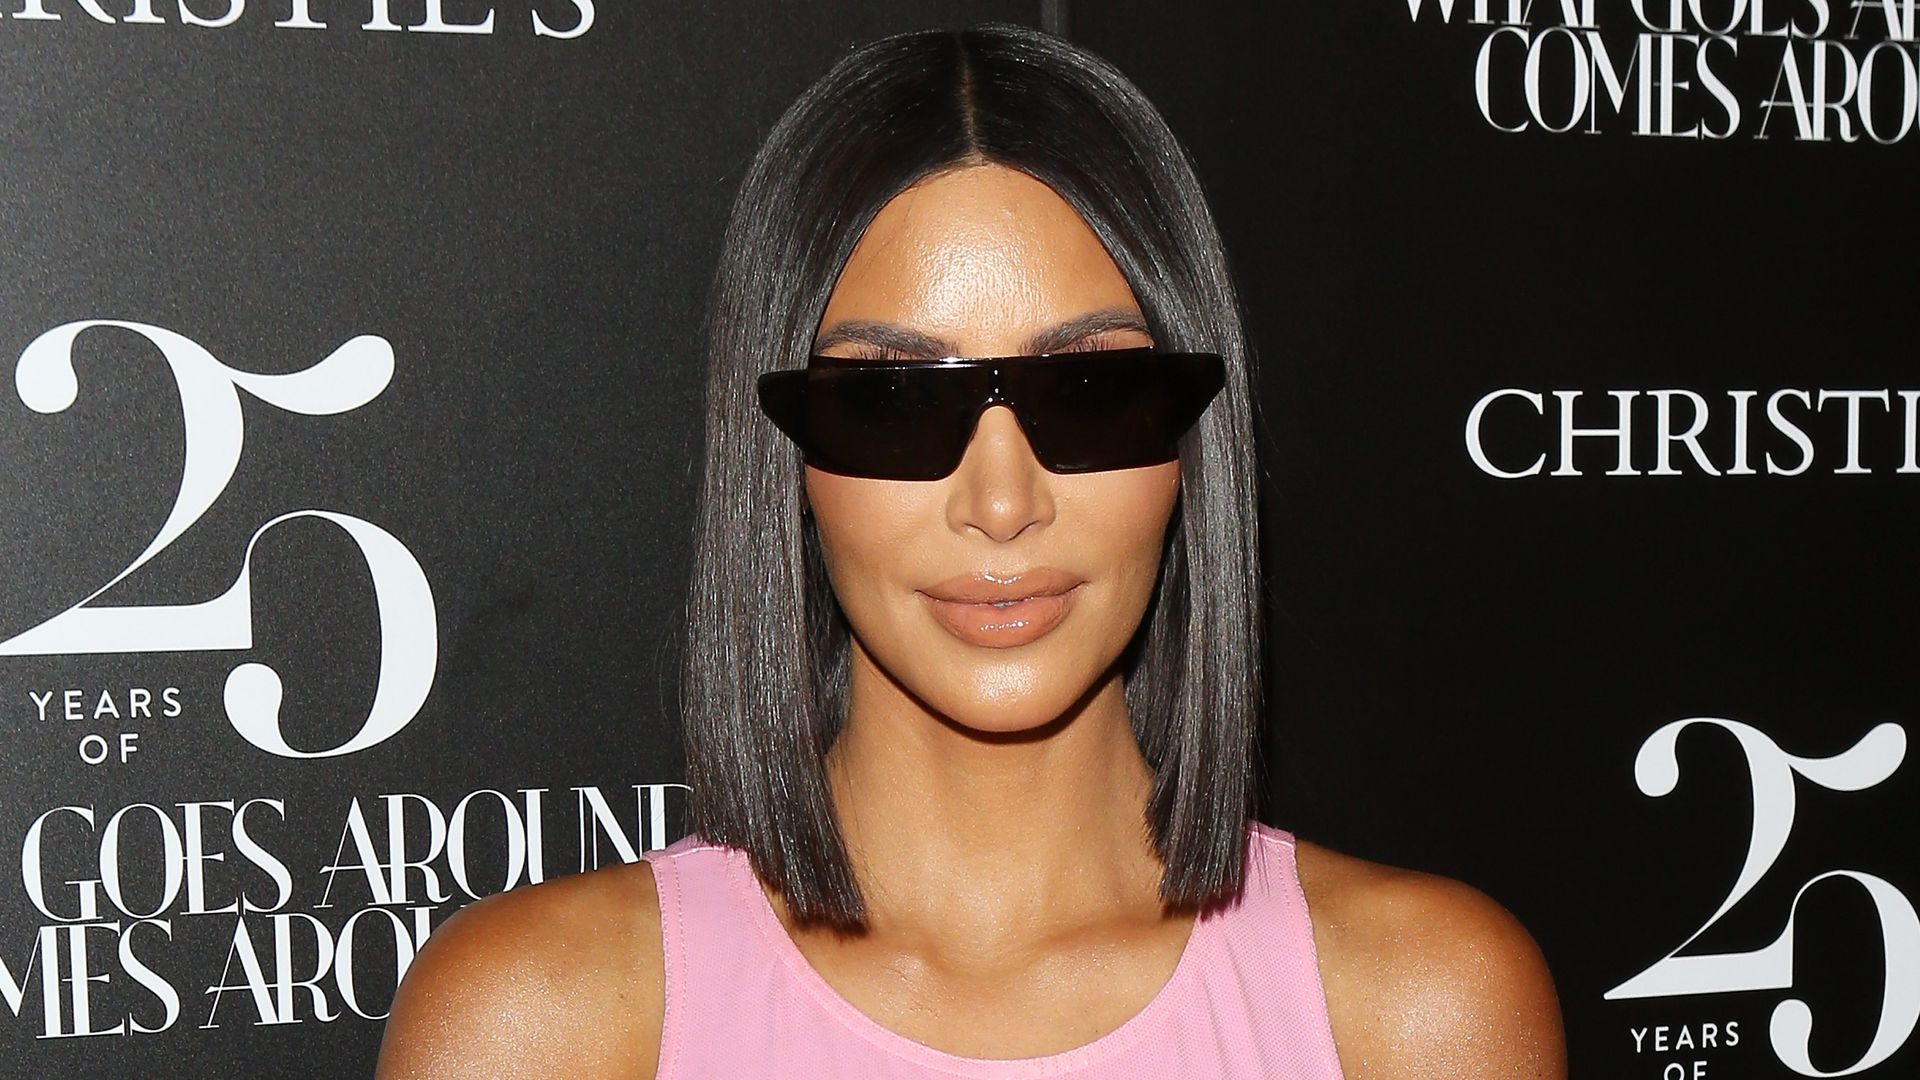 Kim Kardashian where rectangular, dark sunglasses and a light pink tank top posing for a photo seemingly on a red carpet